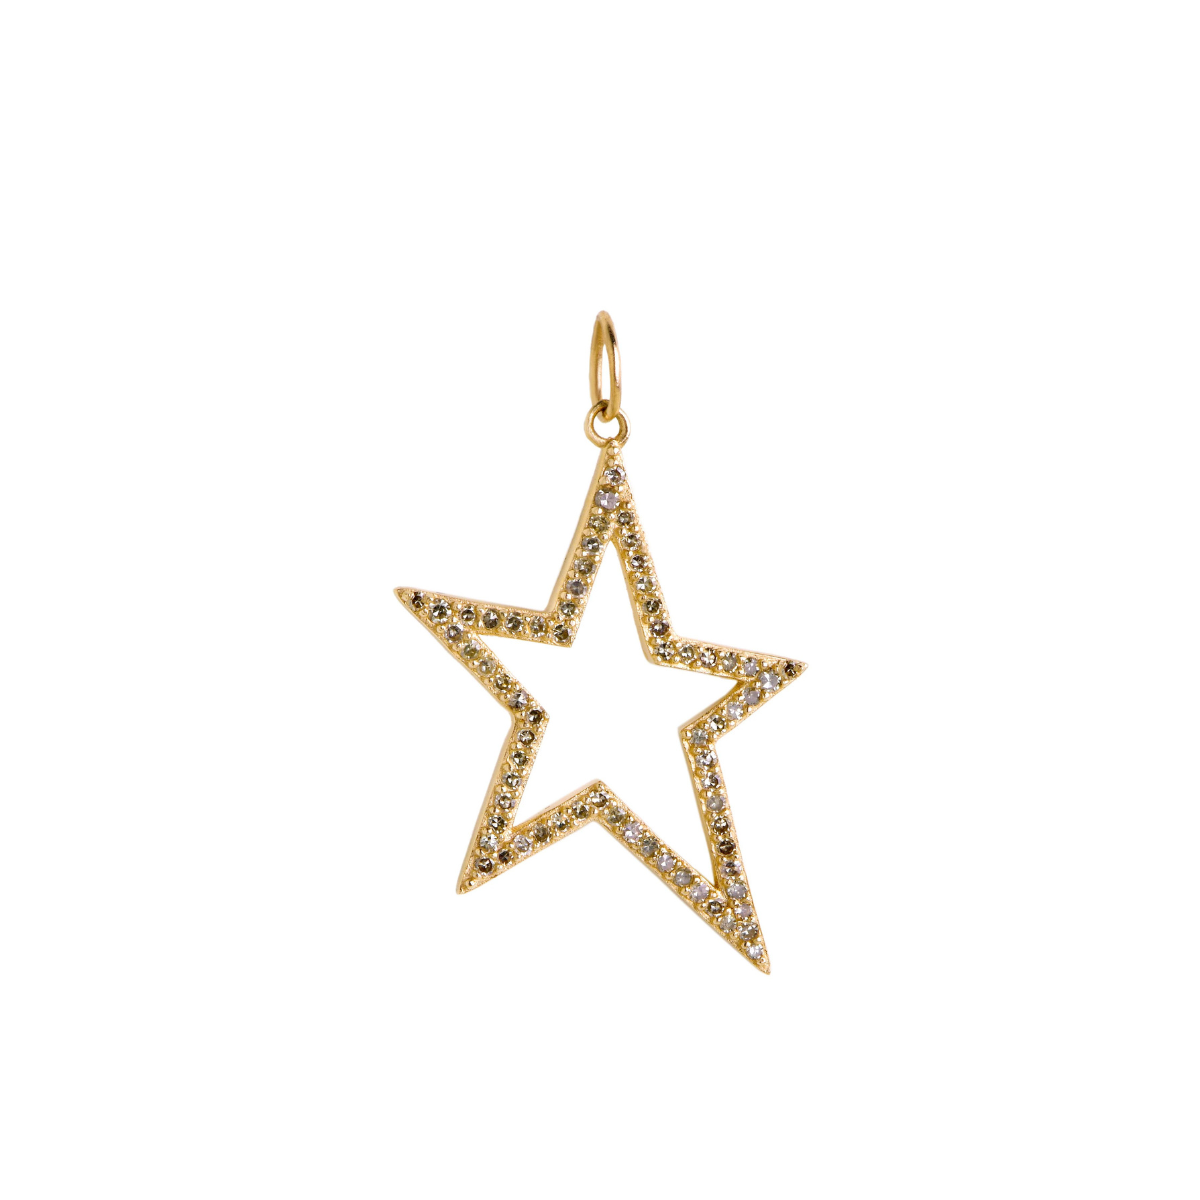 Bridget King Hollow Diamond Star Pendant in Yellow Gold